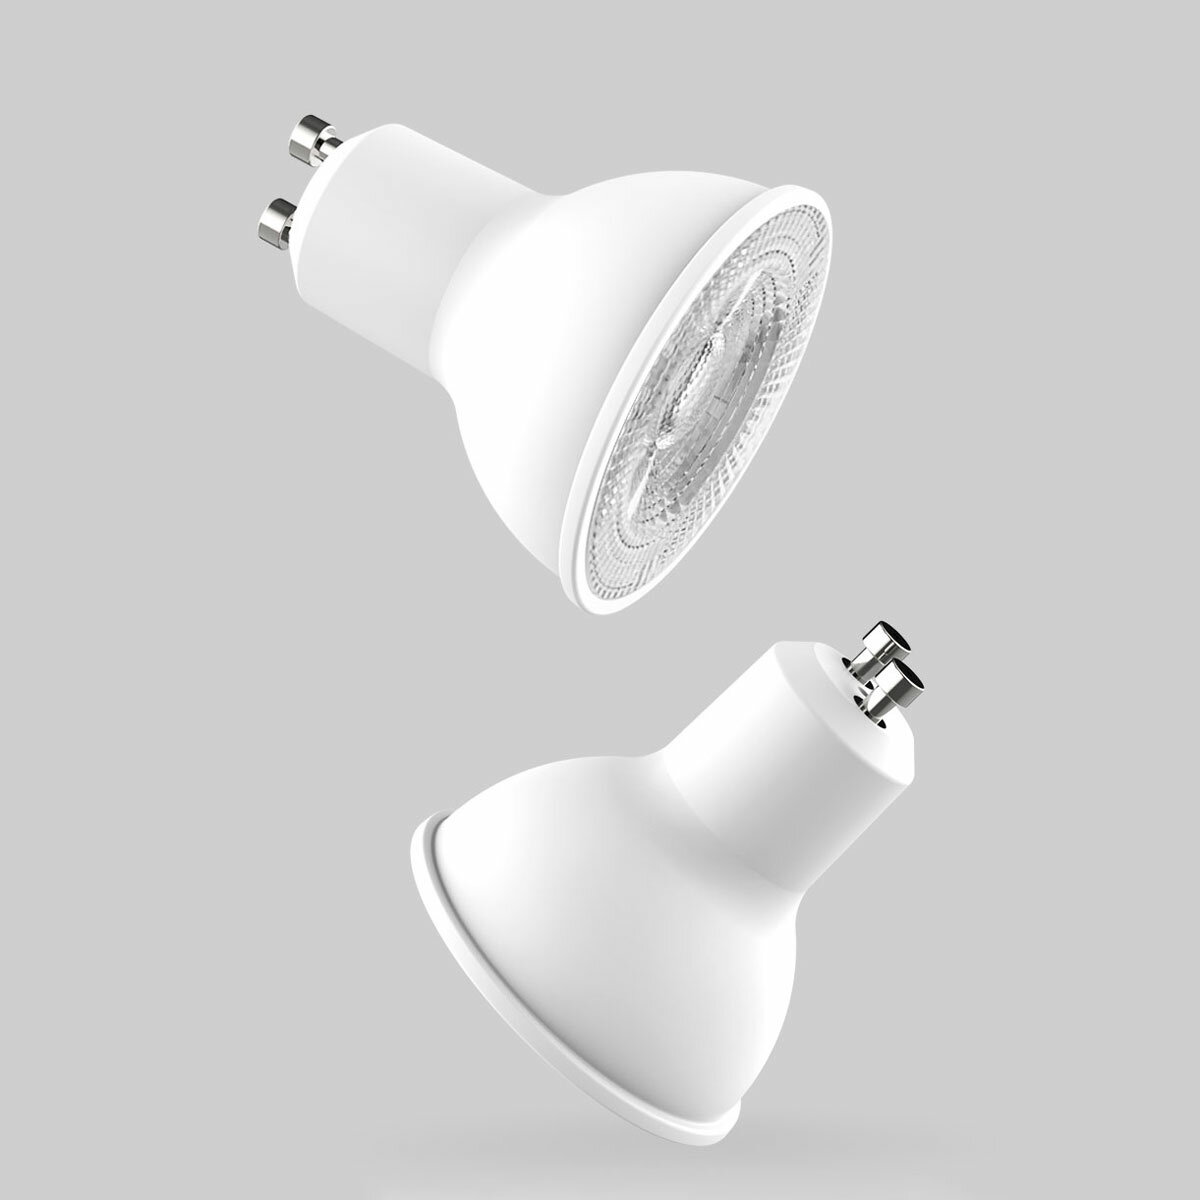 

YEELIGHT YLDP004 AC 200-240V 4.8W GU10 W1 2700K White Light Dimming Version Smart LED Bulb